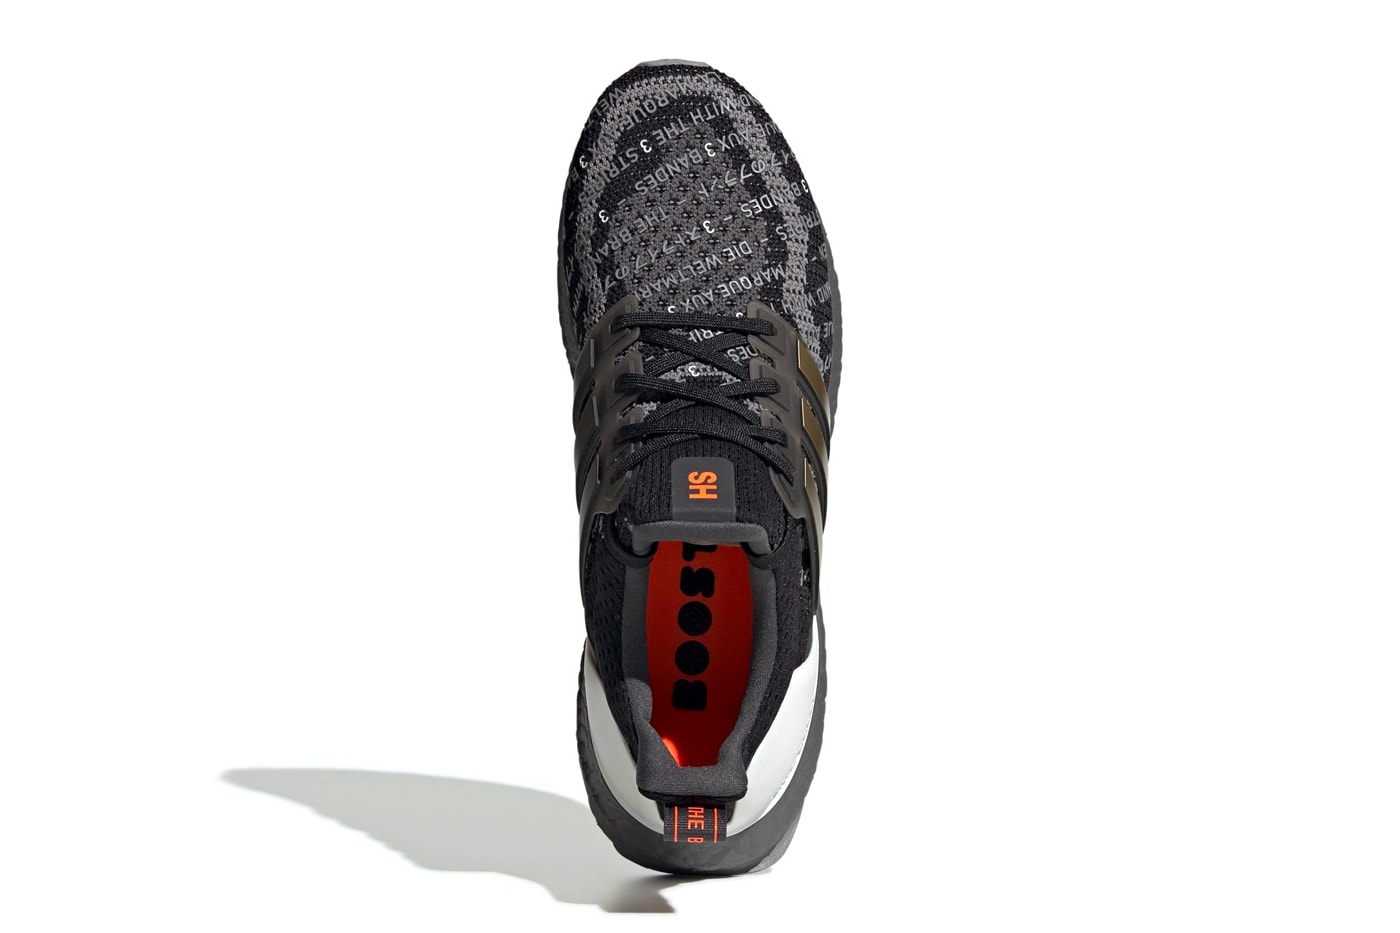 adidas UltraBoost Shanghai Seoul Tokyo CTY Pack Release China Japan South Korea trainers kicks shoes sneakers 